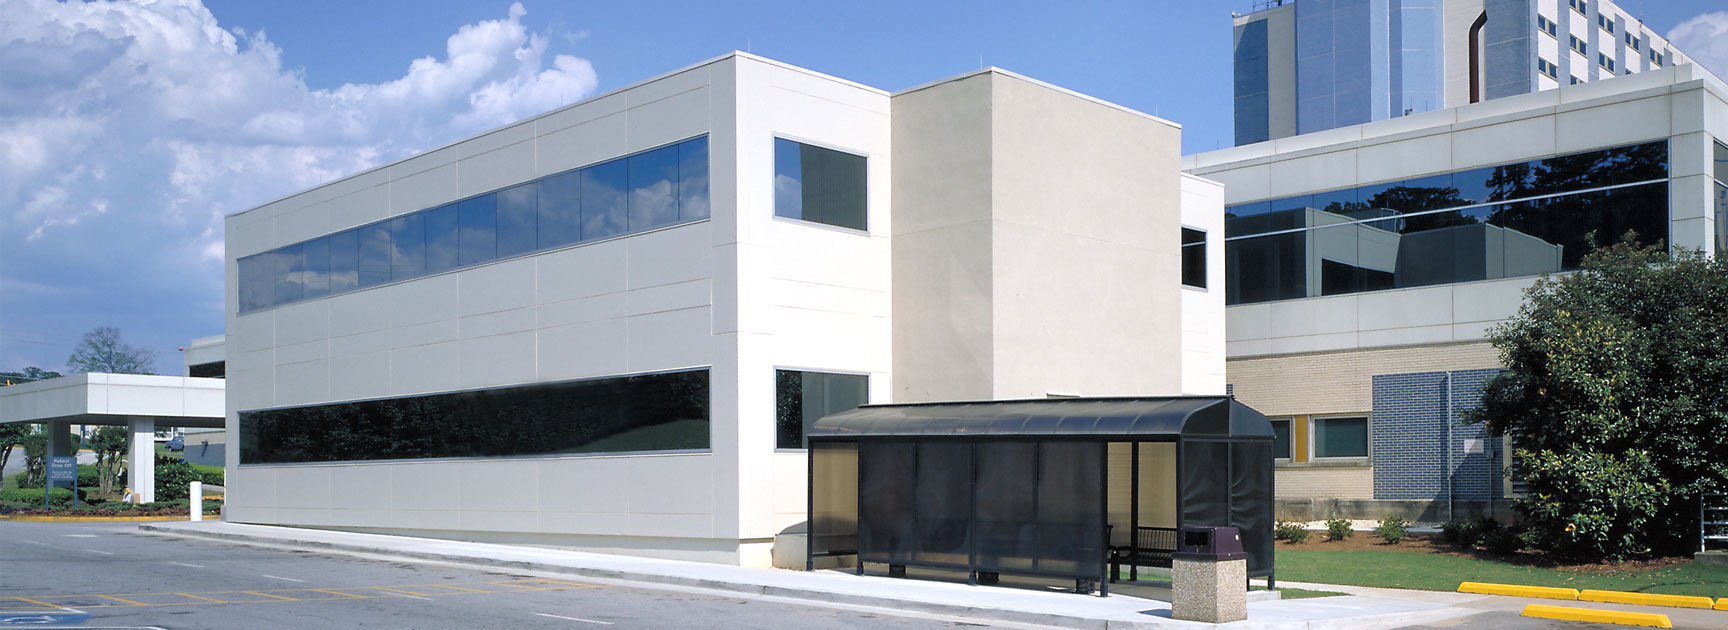 permanent modular building Veterans Administration Hospital Expansion